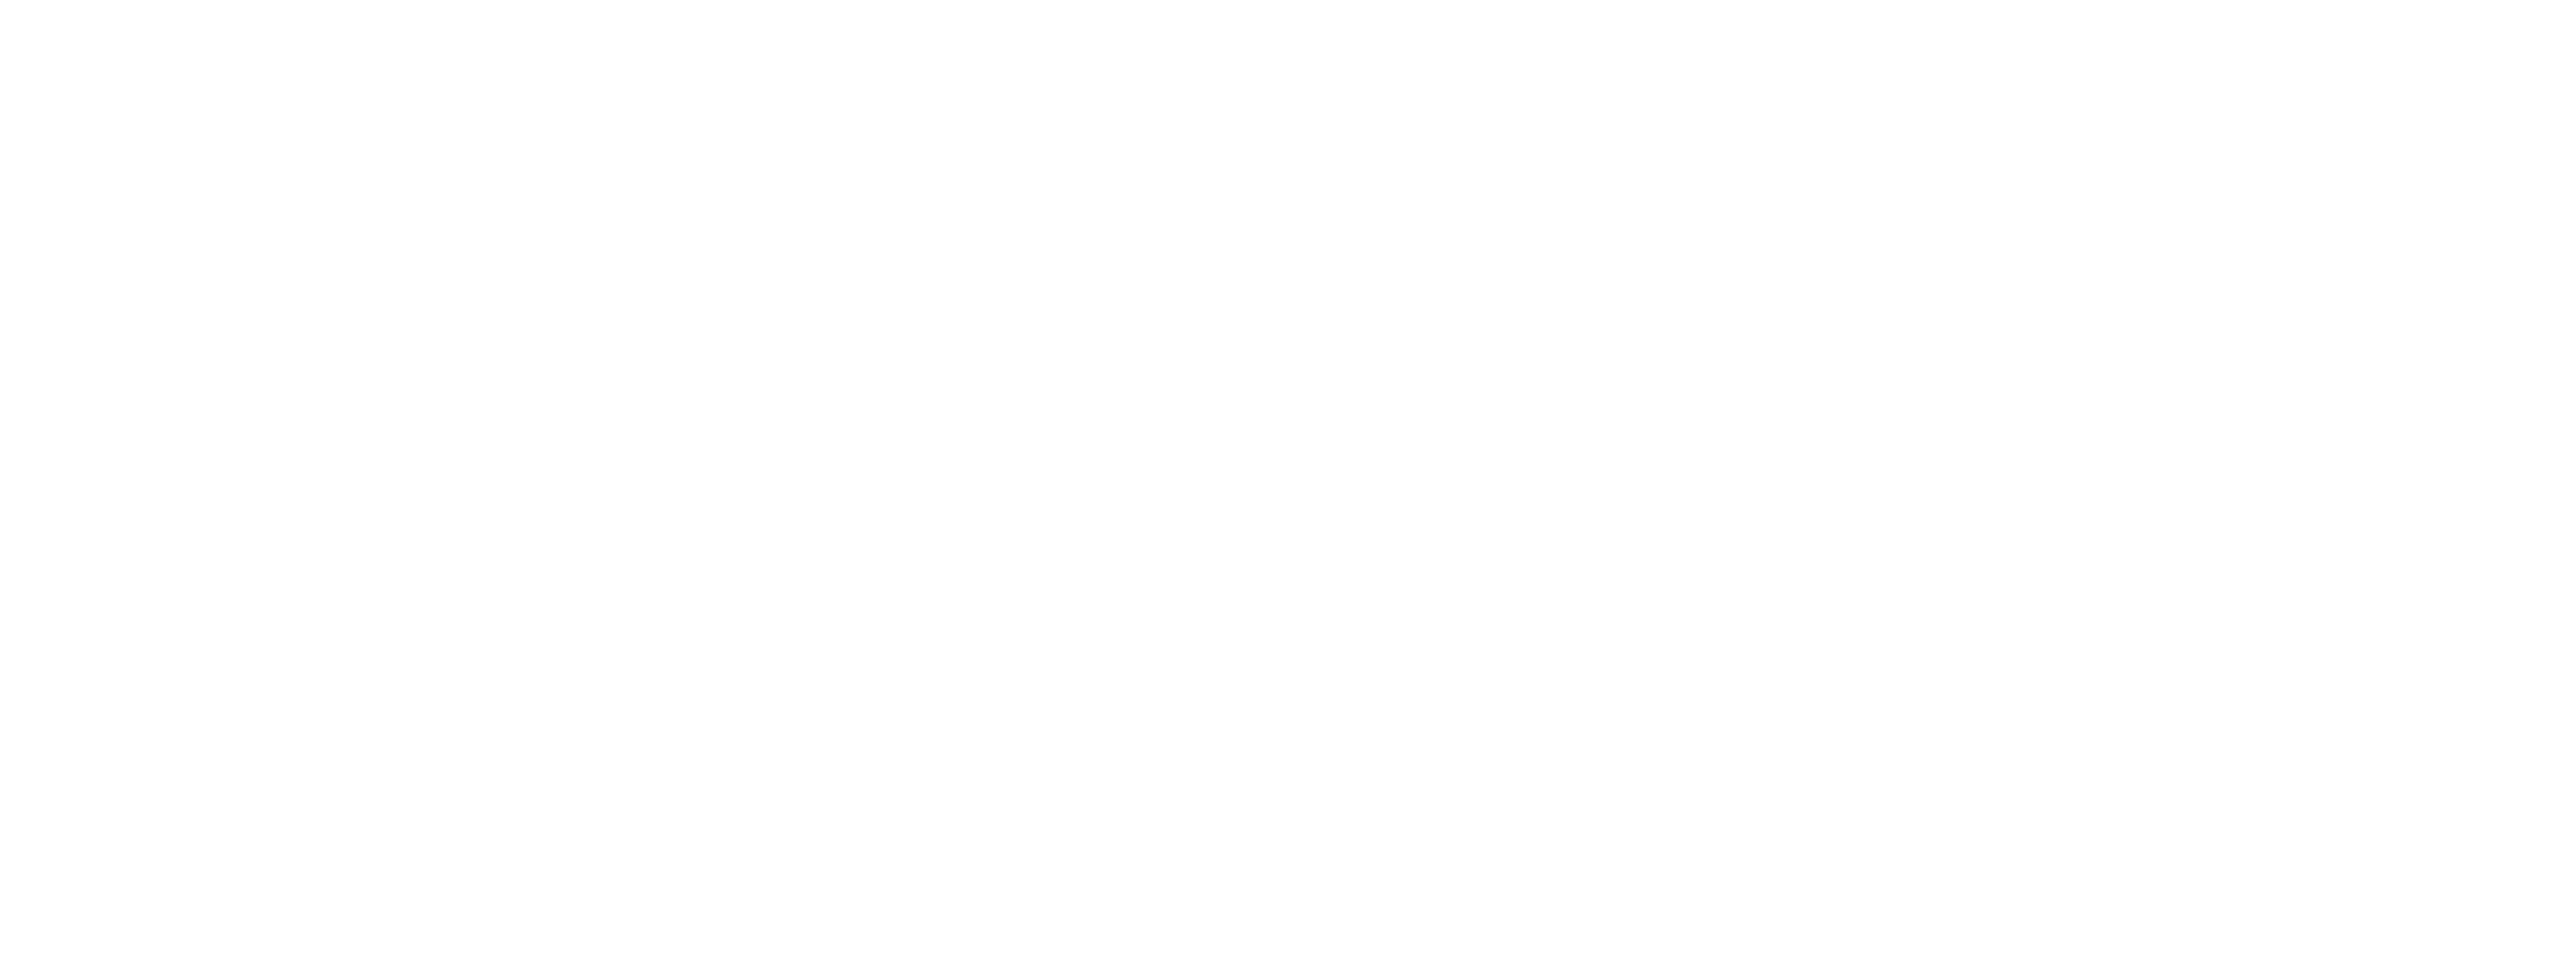 the CIPFA logo